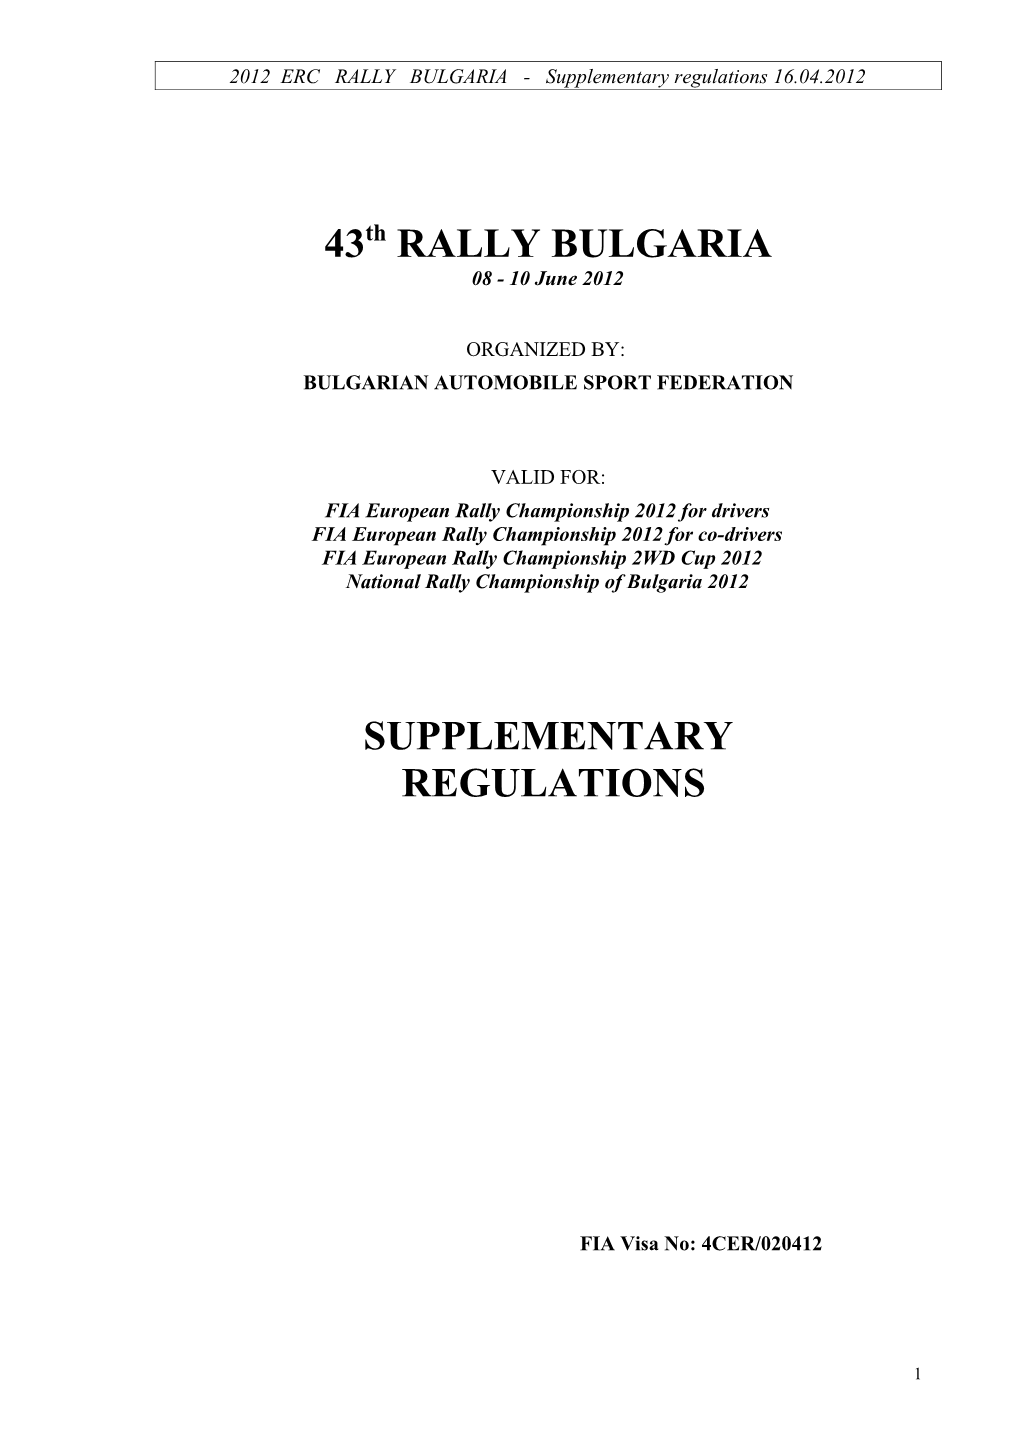 43Th RALLY BULGARIA SUPPLEMENTARY REGULATIONS